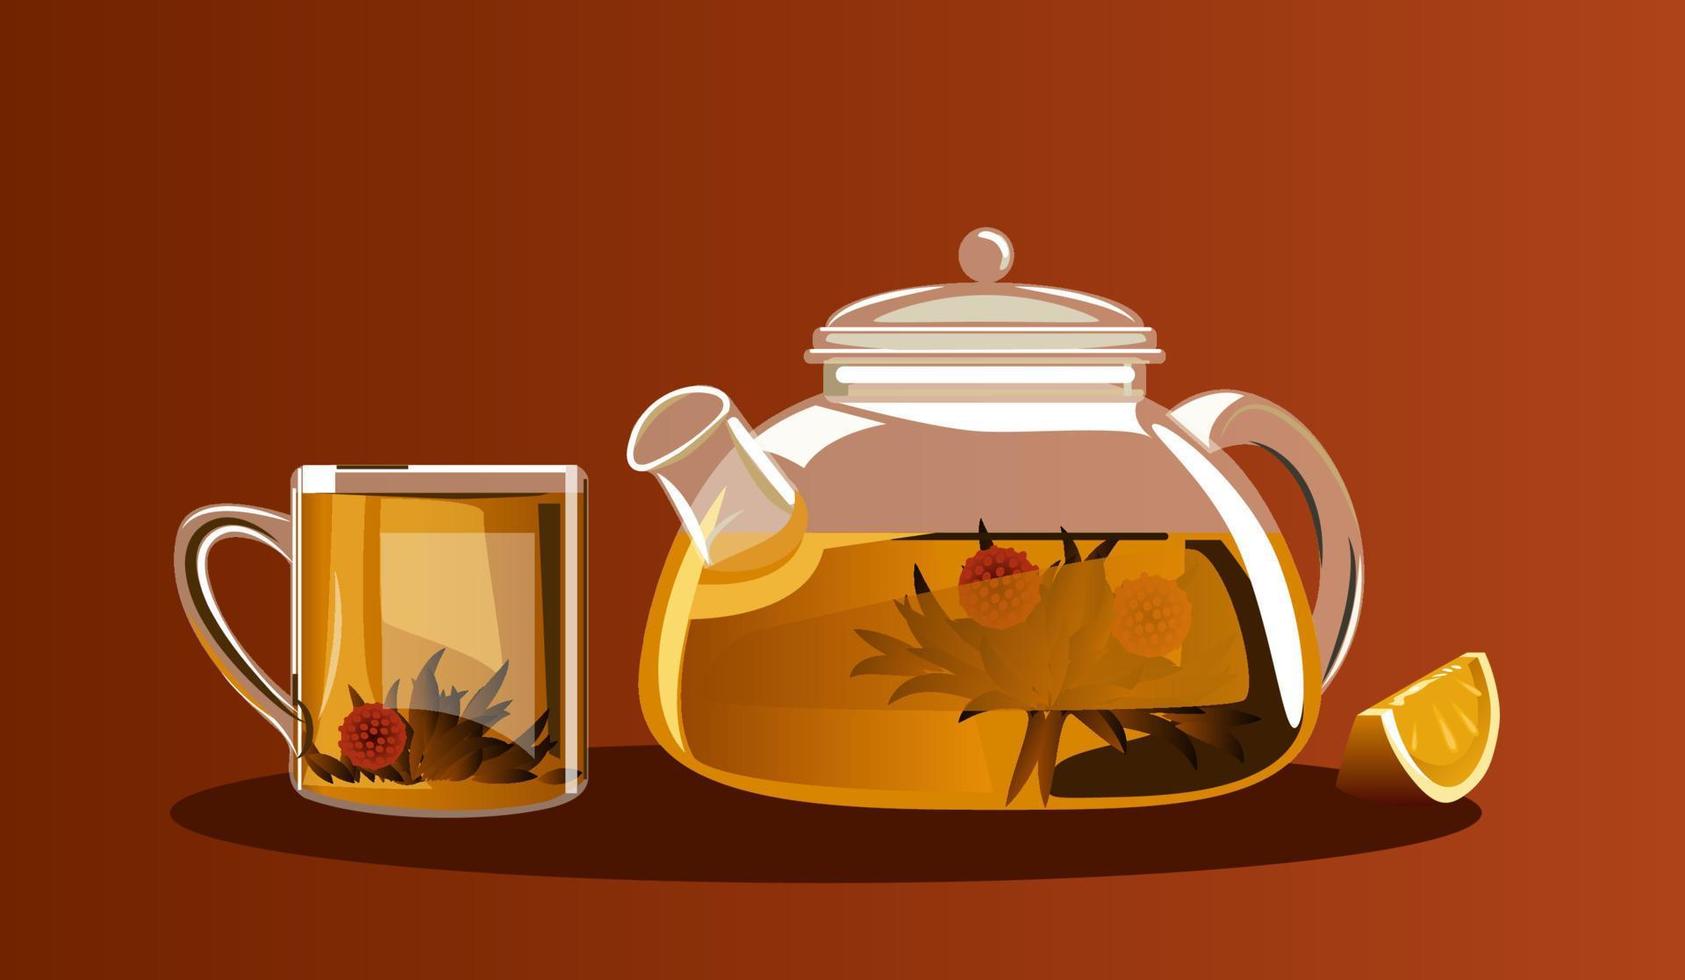 té con limón, té preparado en una tetera, fiesta de té, té preparado, tetera con taza. ilustración vectorial vector